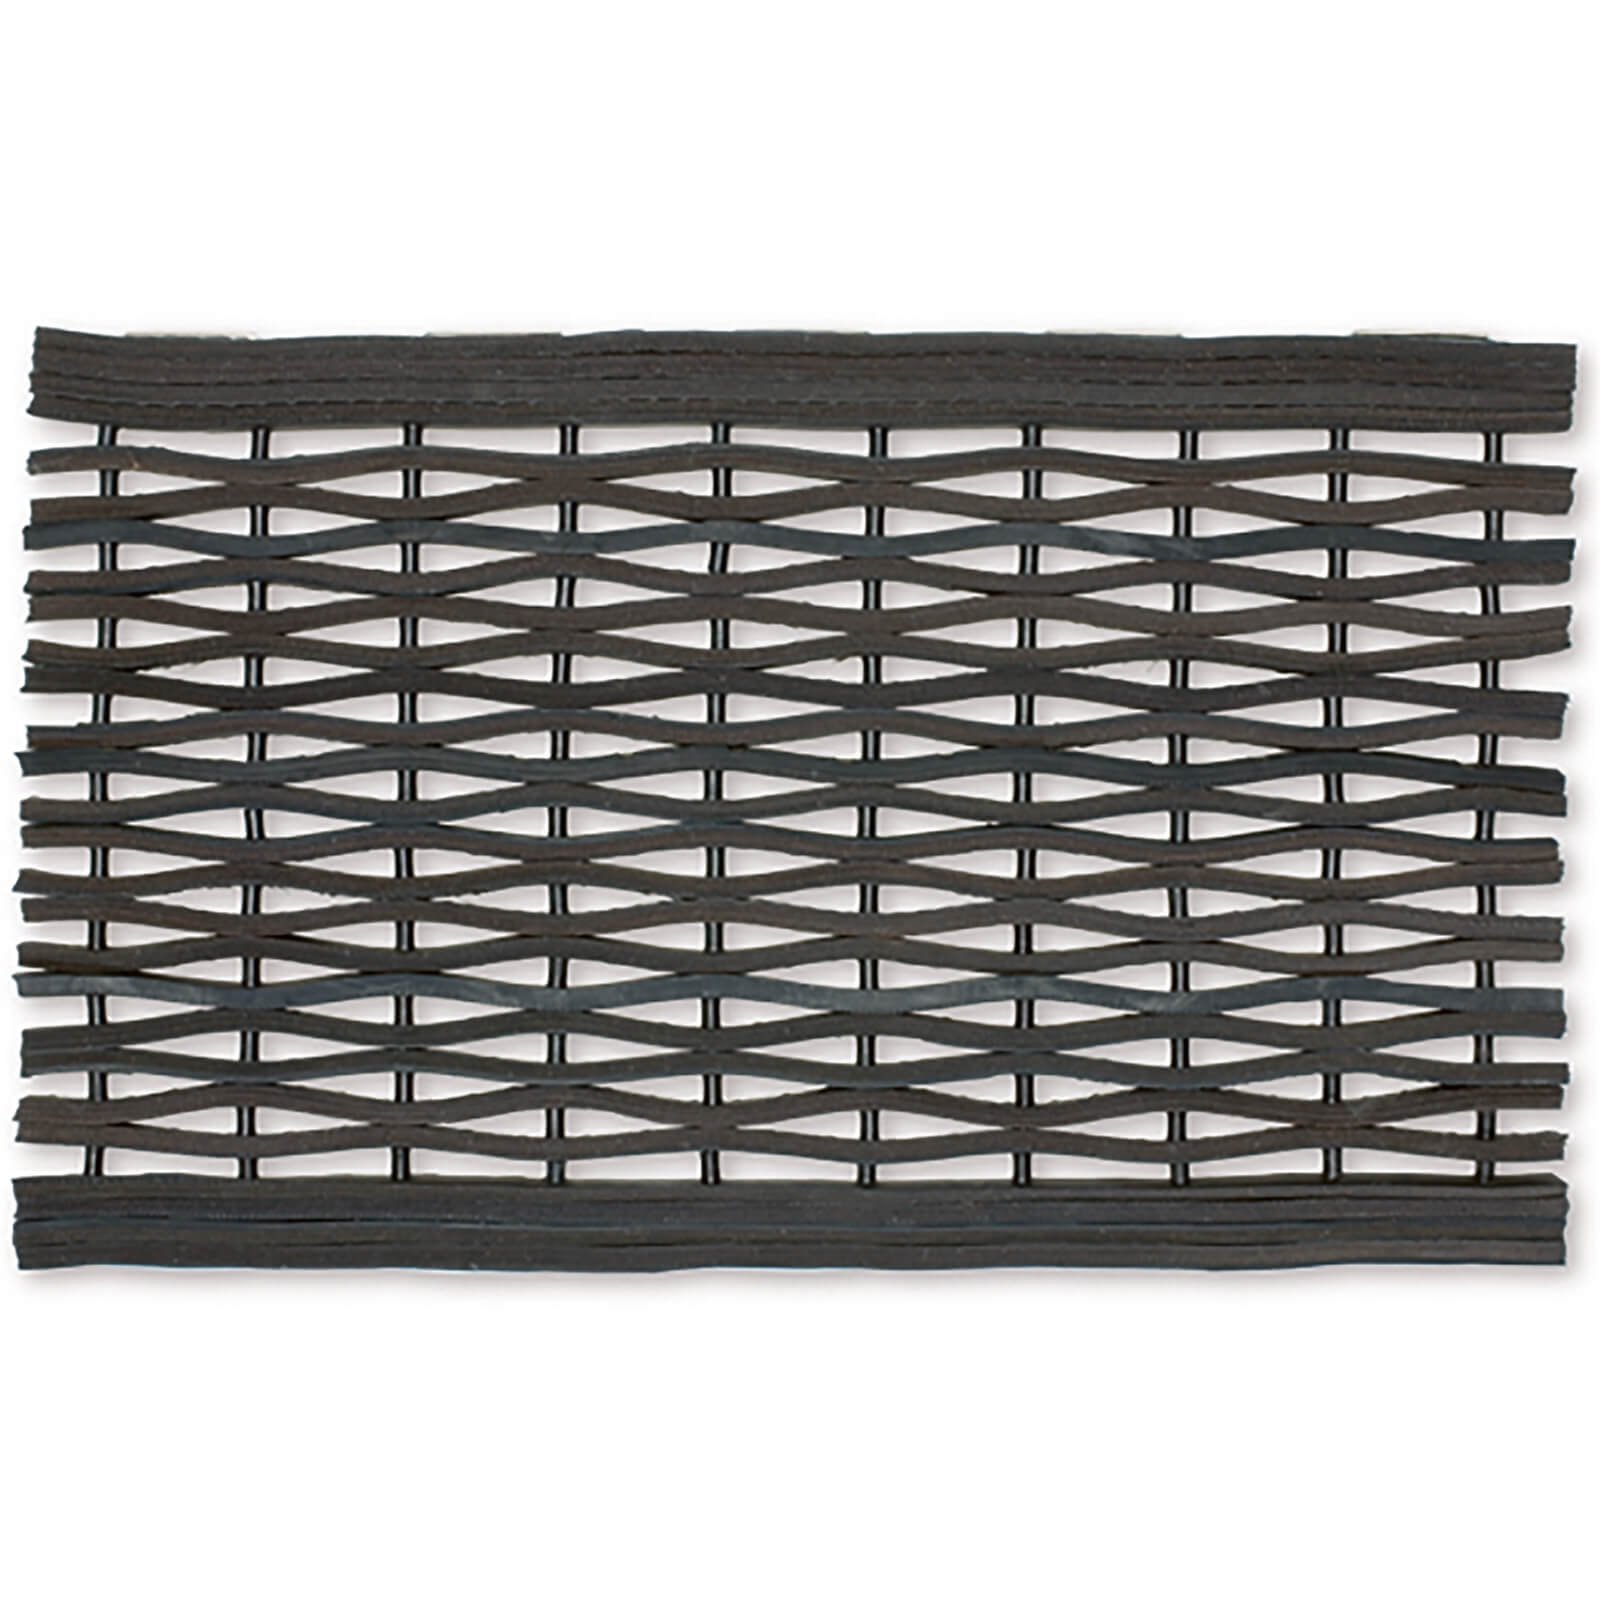 Photo of Ecomat Doormat - Black Grid